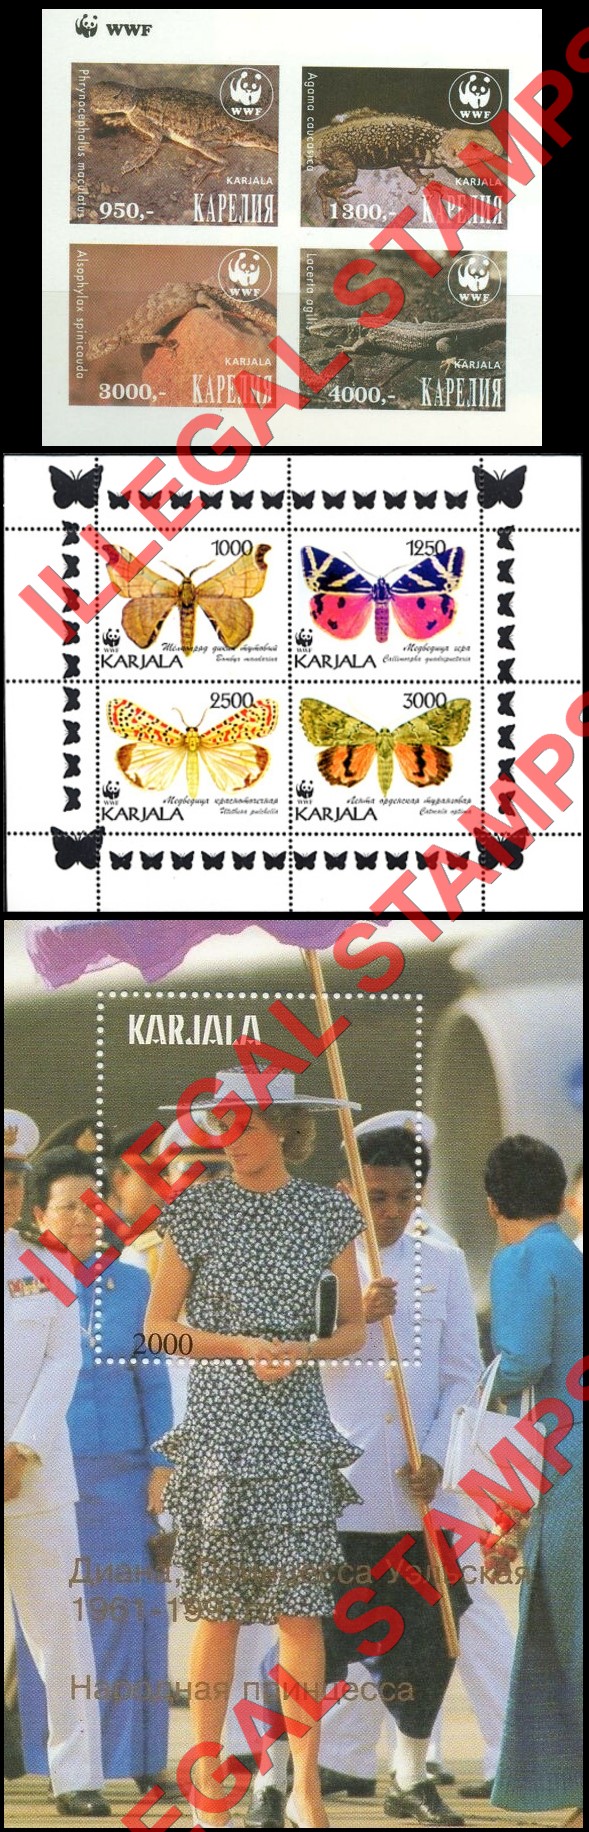 Karjala 1997 Illegal Stamps (Part 3)